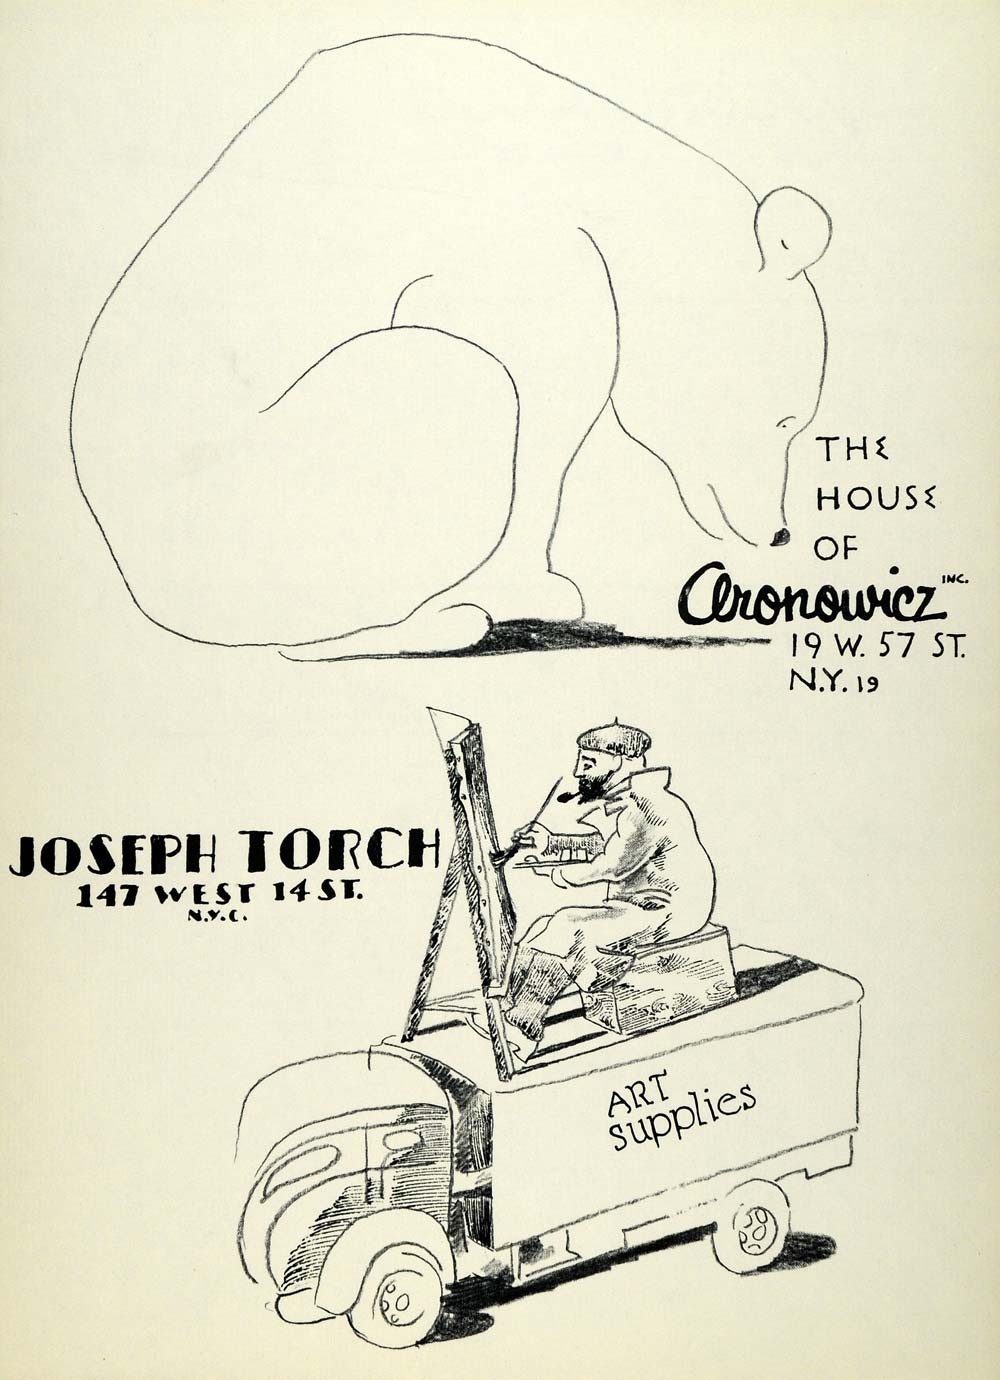 1957 Lithograph Art Joseph Torch Artist Supplies House Aronowicz Polar Bear AEF6